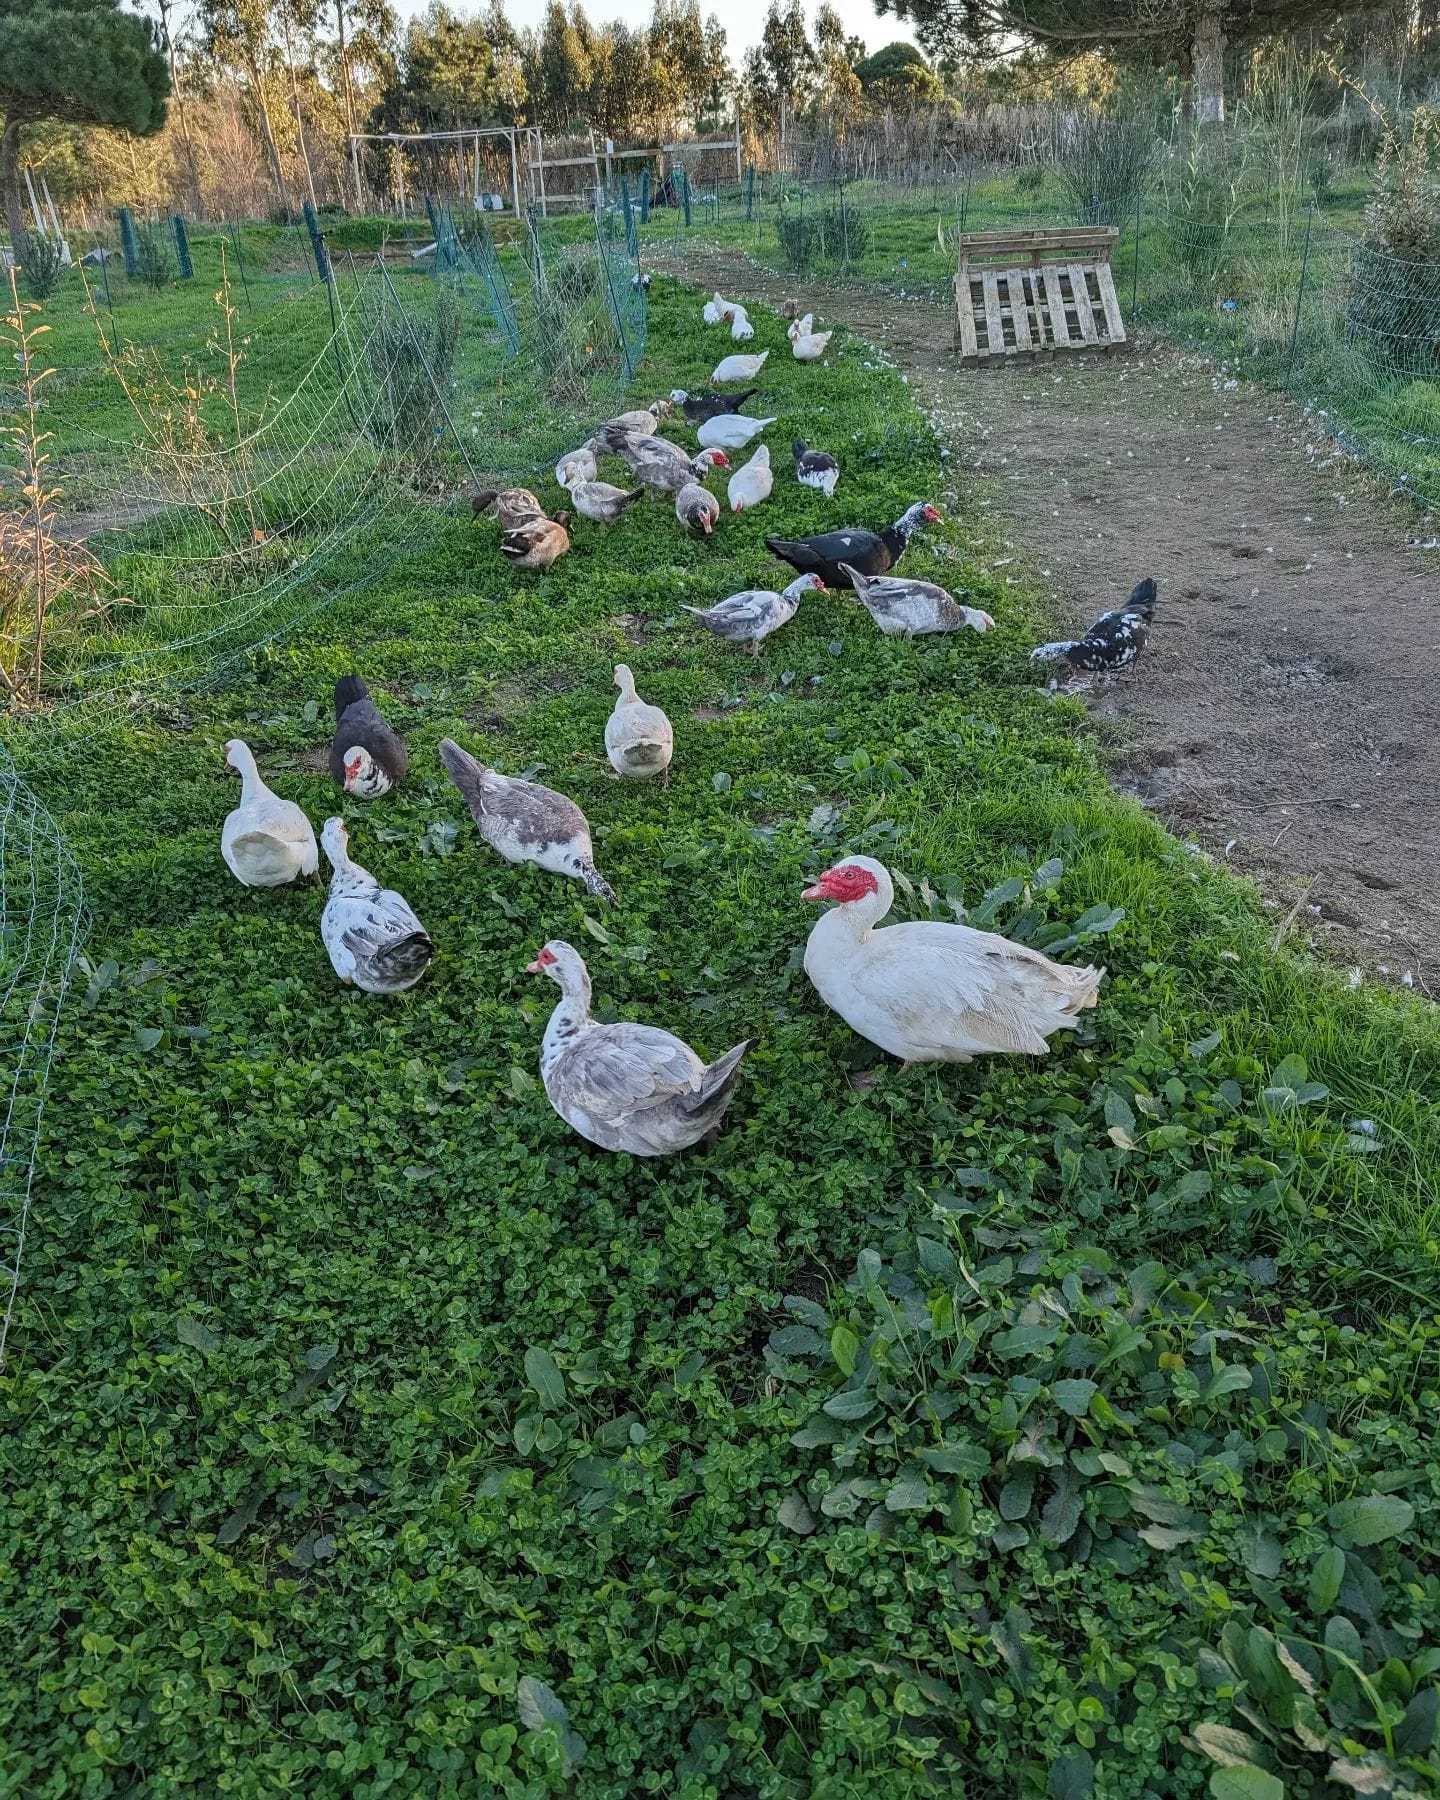 Fresh strip of grass for the ducks